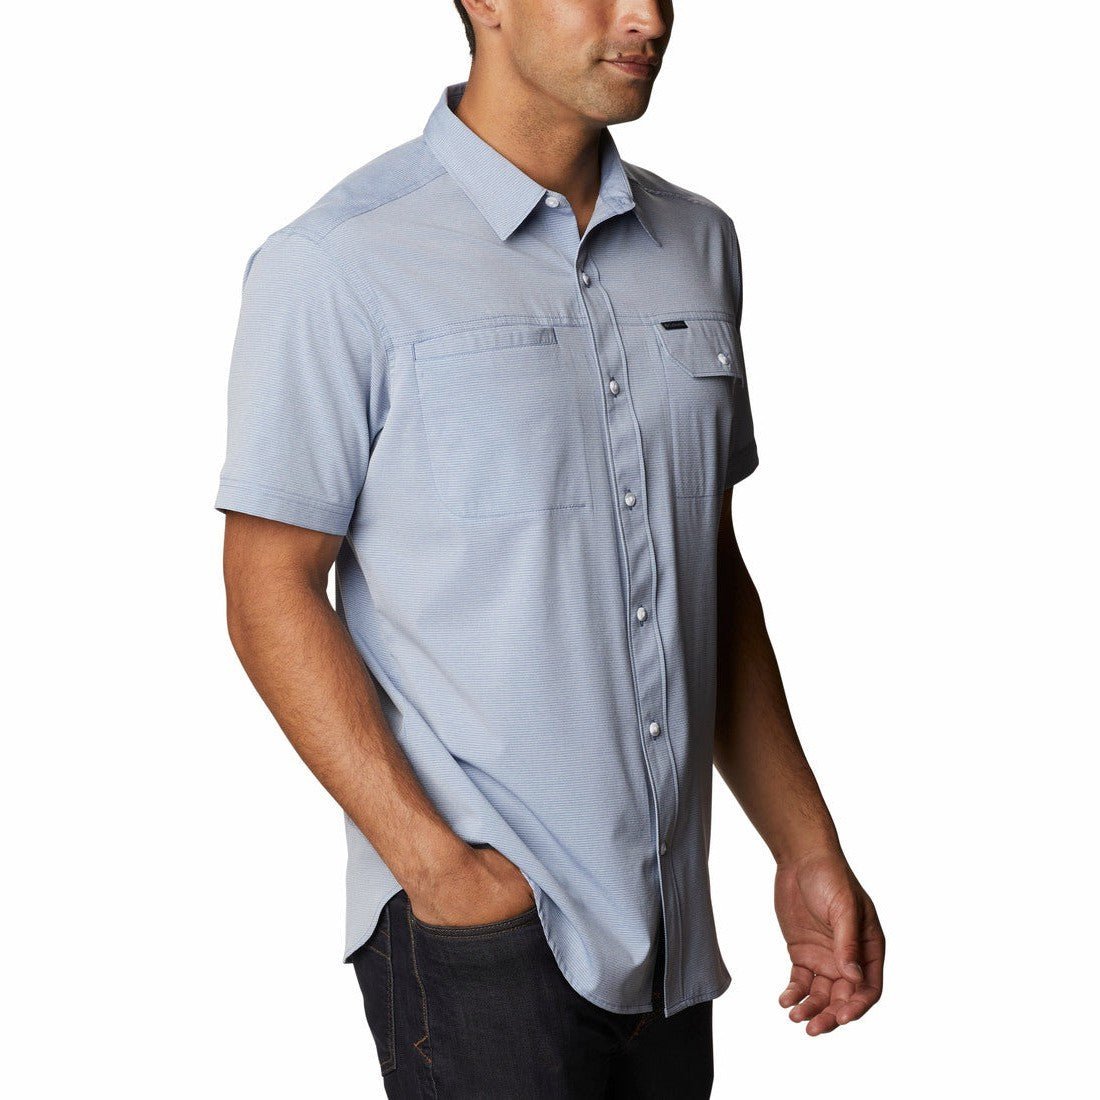 Columbia Men's Viewmont Stretch Short Sleeve Shirt - Sm, Med, XL Only